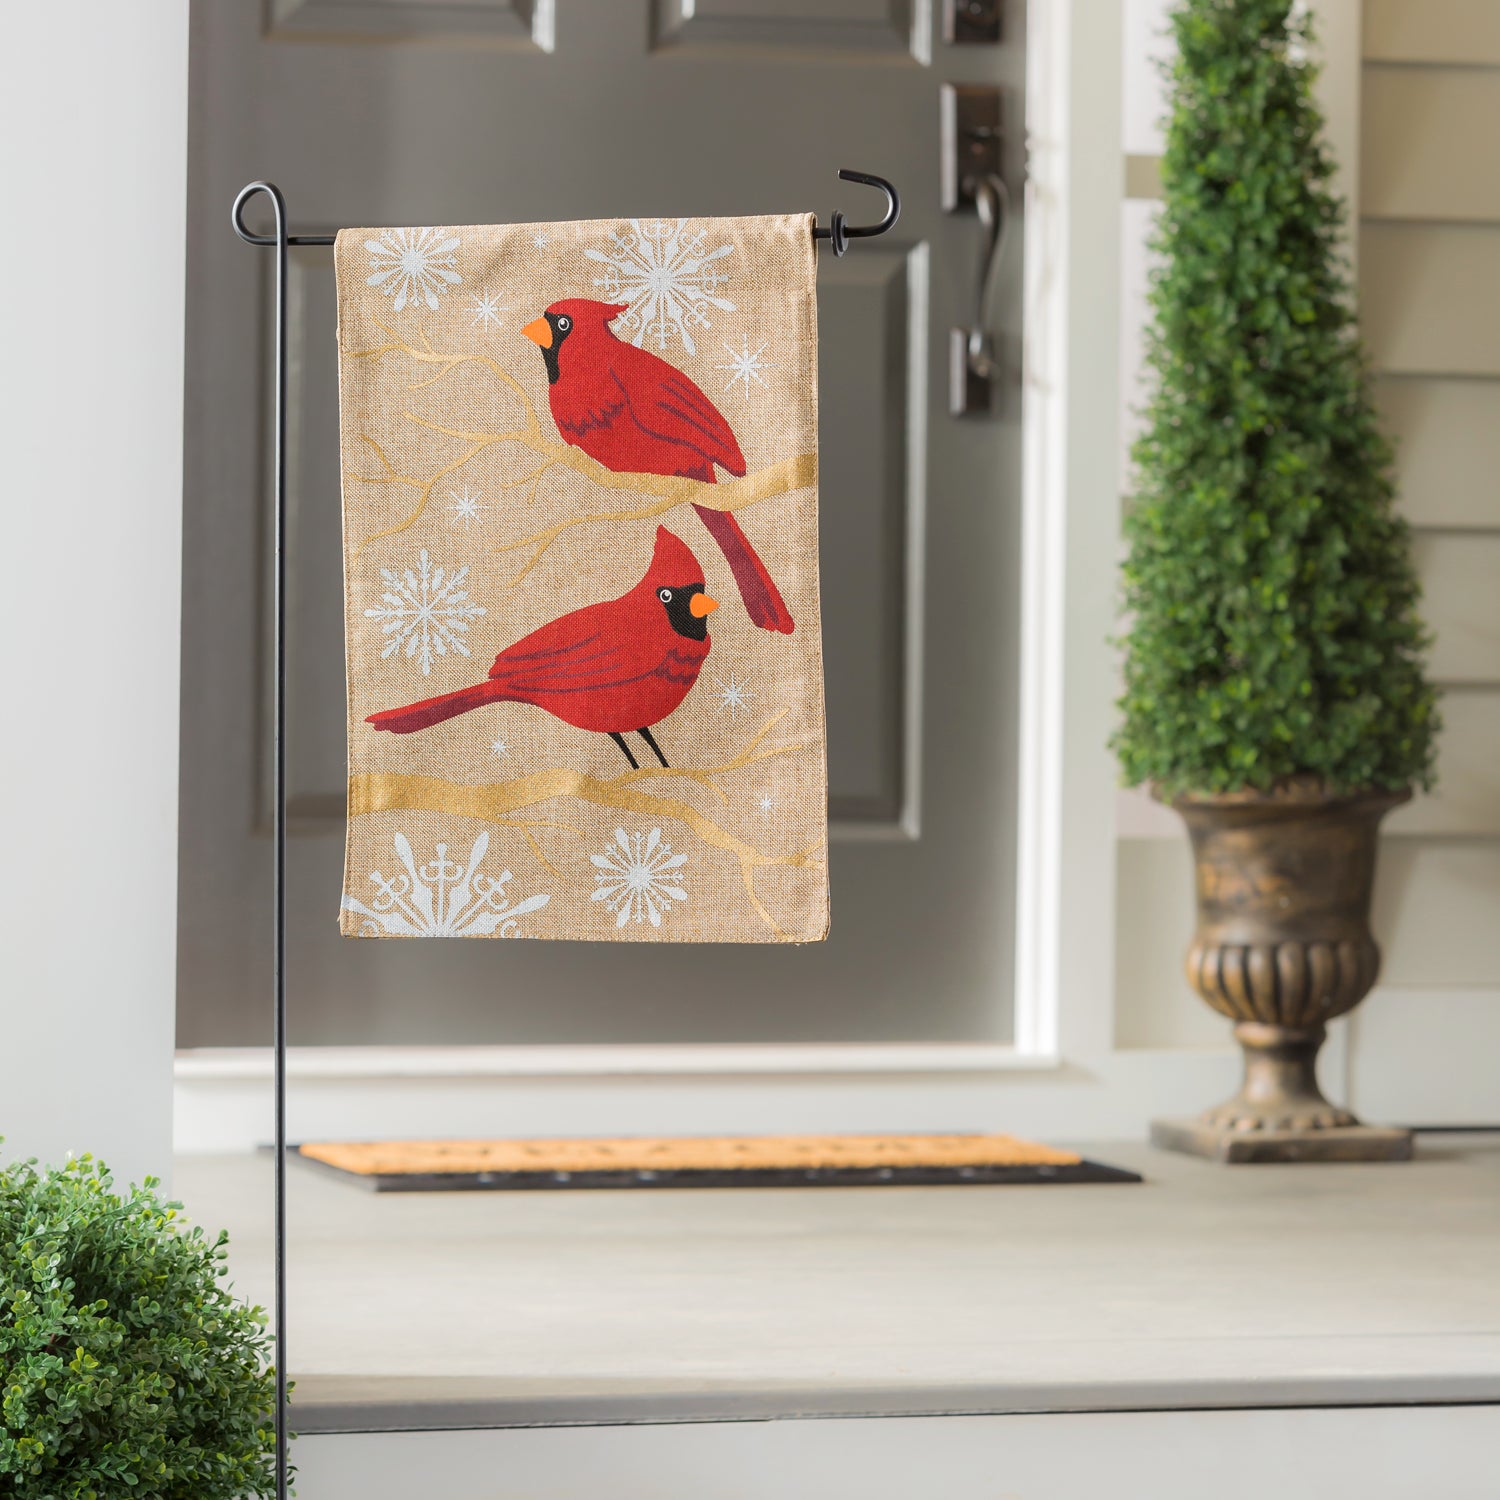 Evergreen Burlap cardinal Feathers and Snow Garden Flag 12.5 x 18 inches flag 